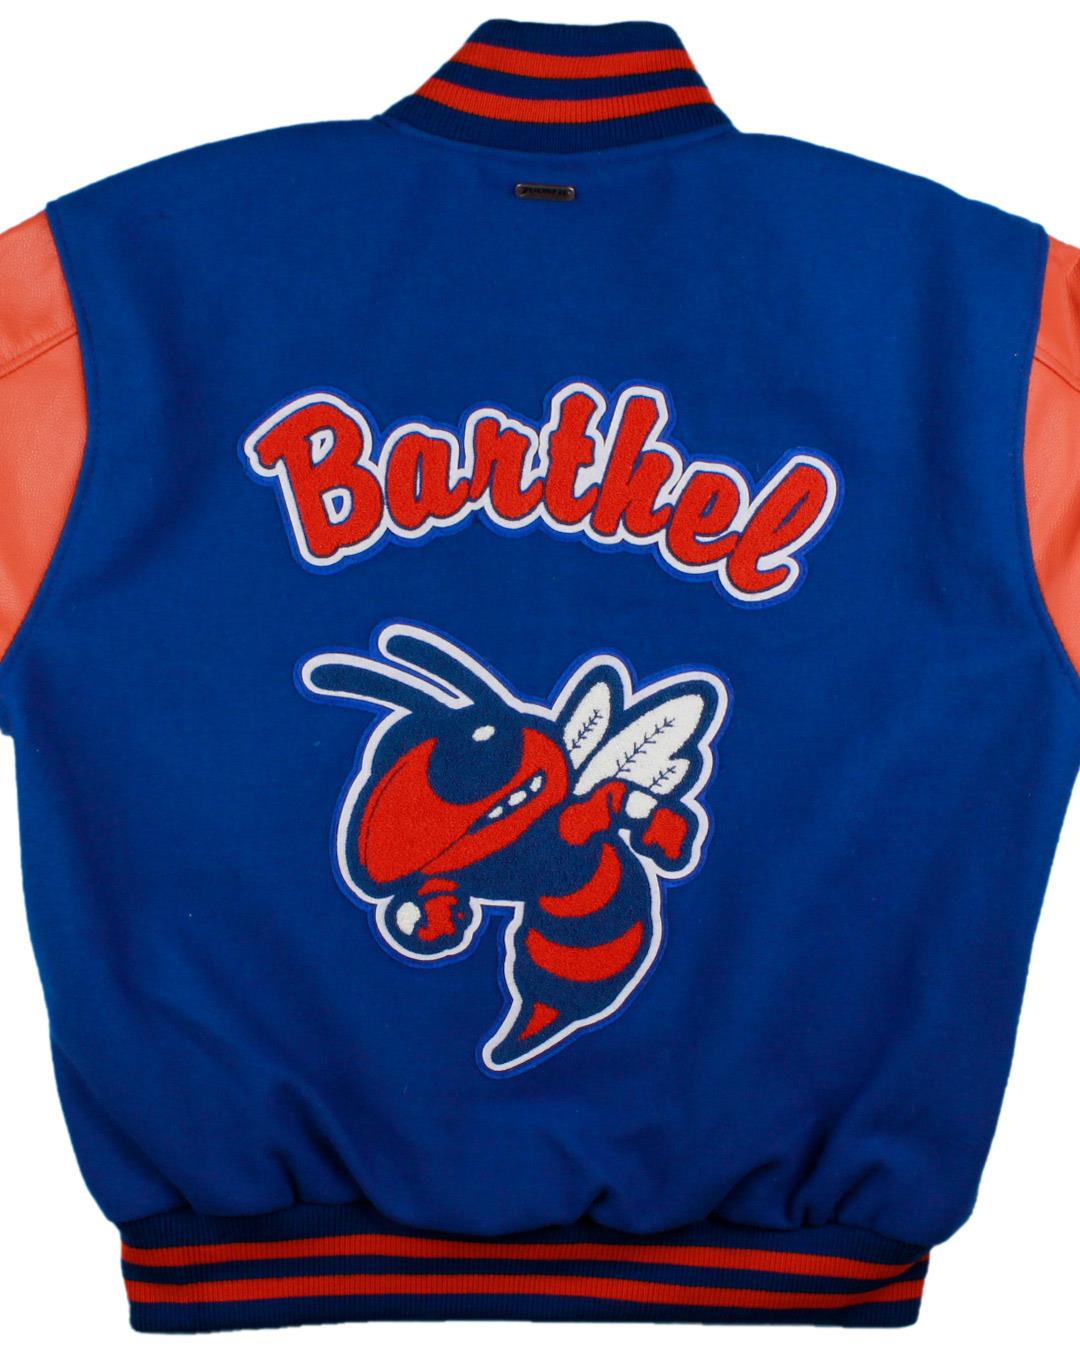 Bartow High School Lettermen Jacket, Bartow, FL - Back